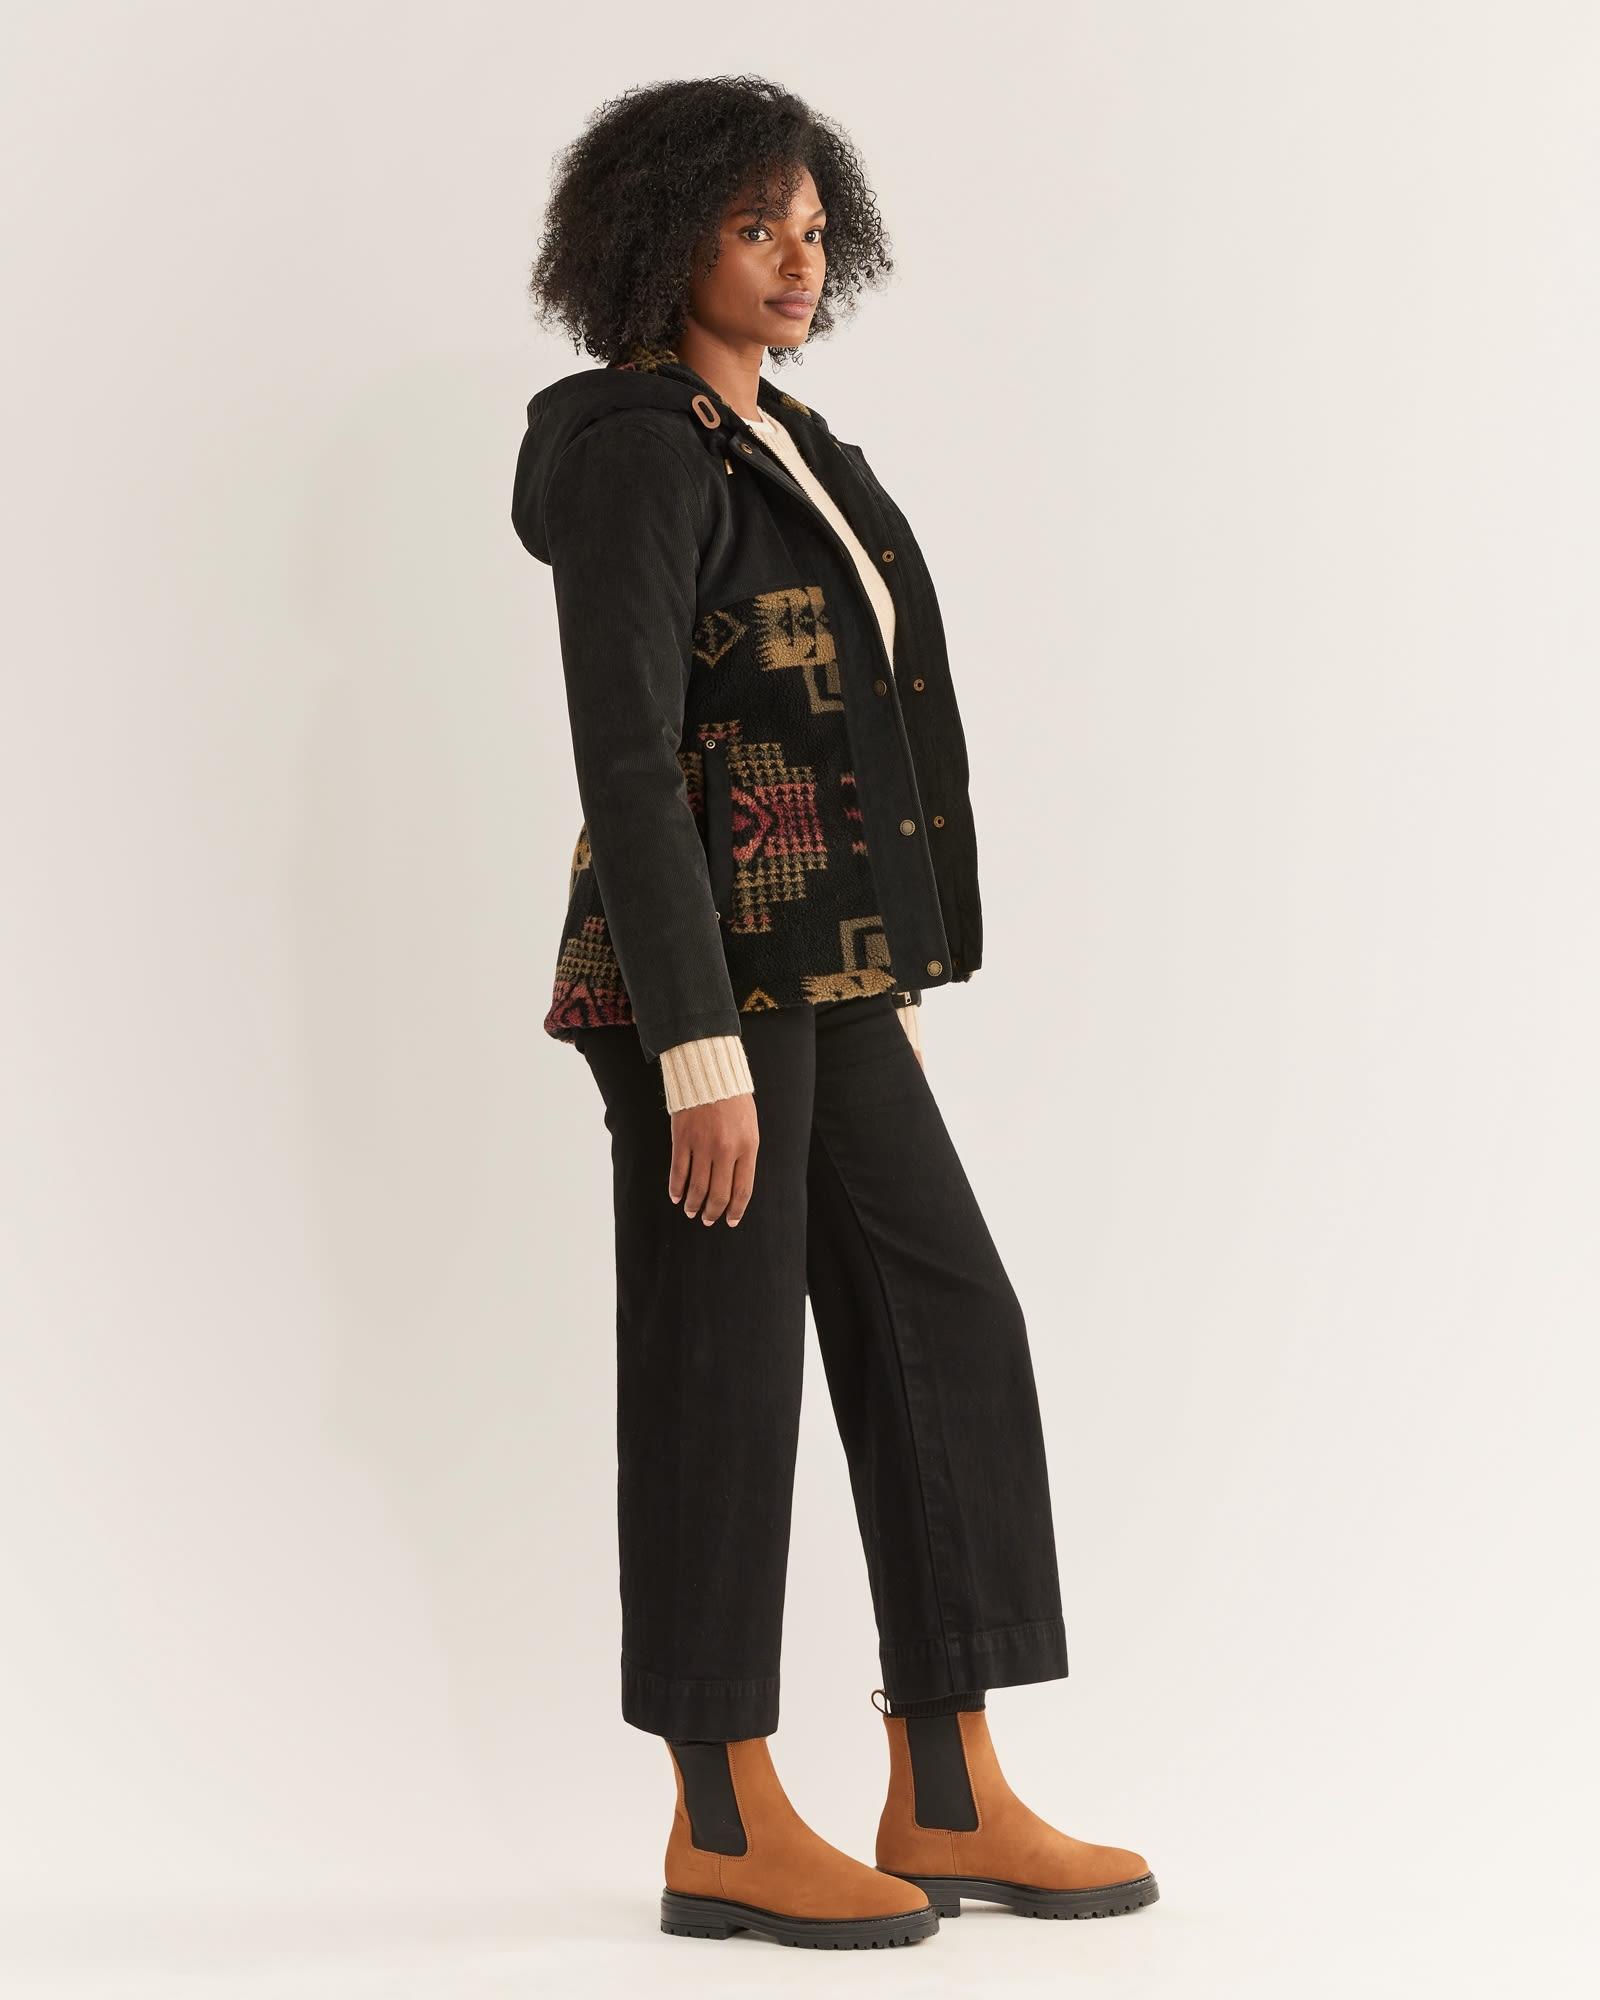 Pendleton Women's Blanca Corduroy/Berber Fleece Jacket